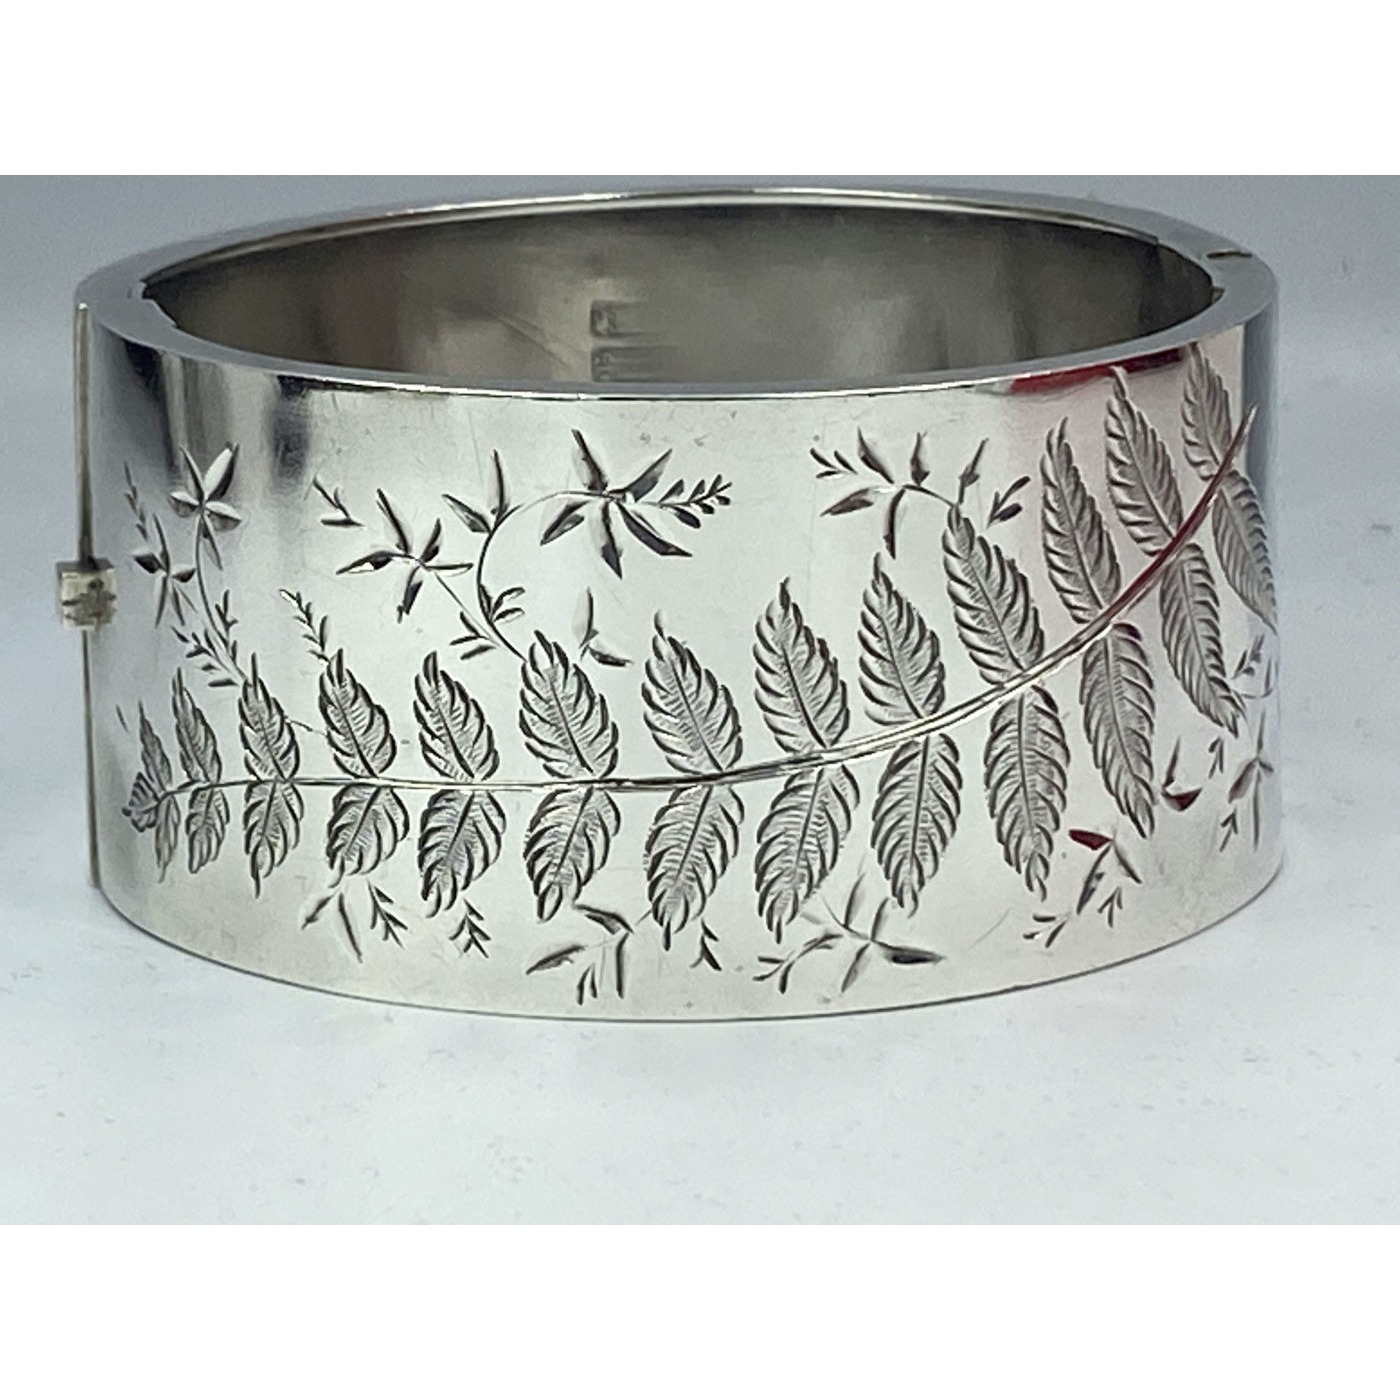 Extra Wide Singular Long Fern Leaf Engraved Antique English Silver Bangle